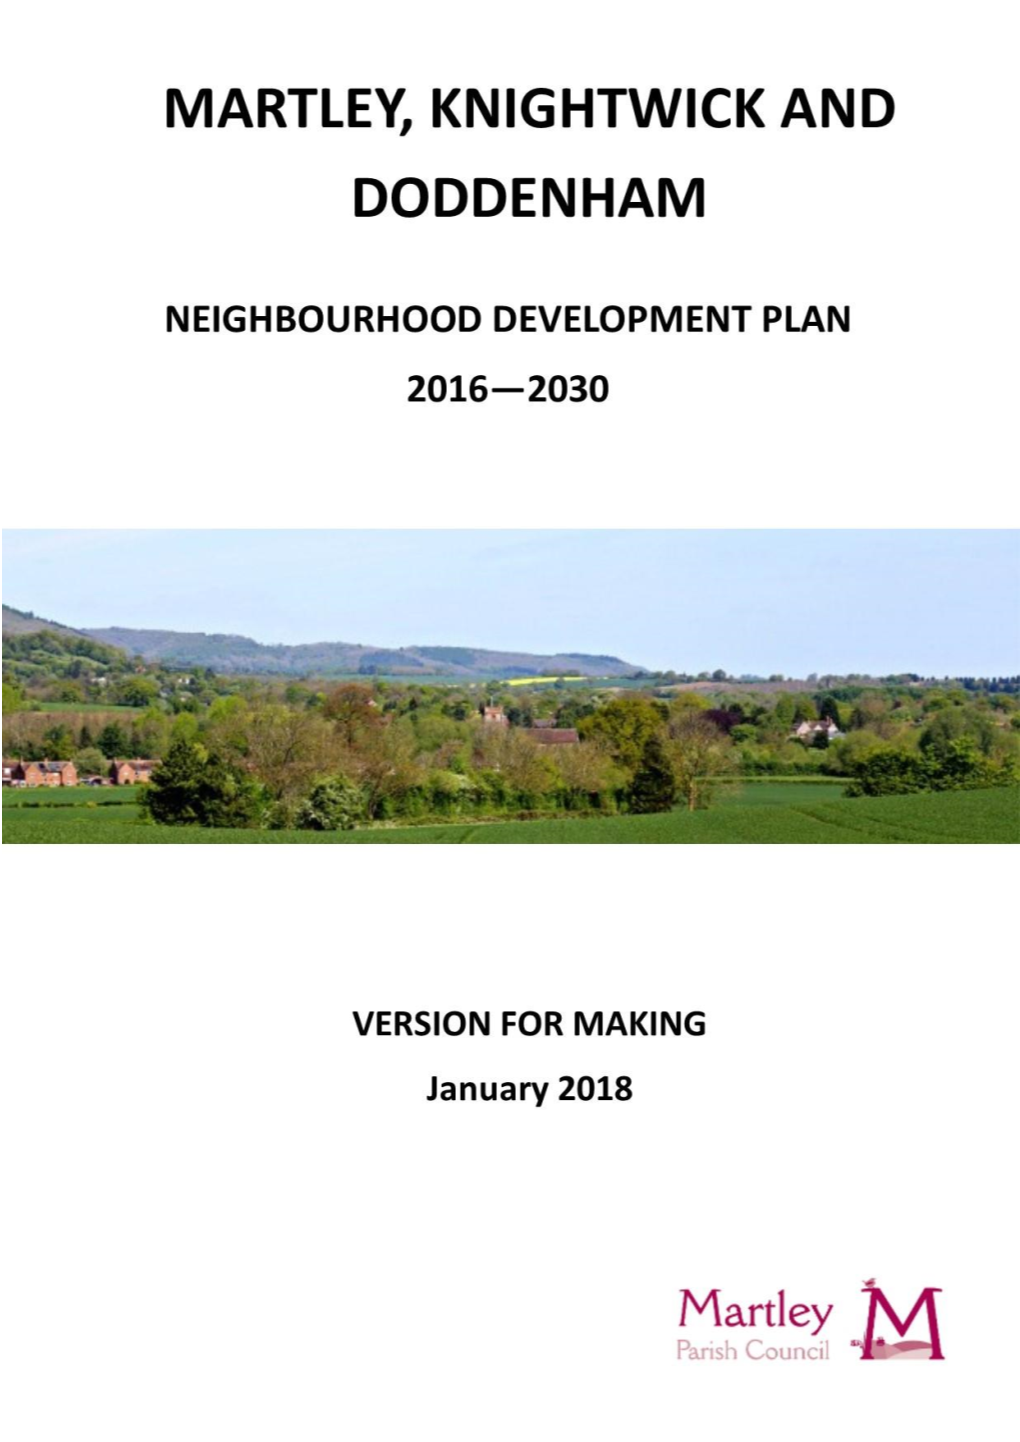 Martley, Knightwick and Doddenham Neighbourhood Development Plan (NDP), Version for Making, January 2018